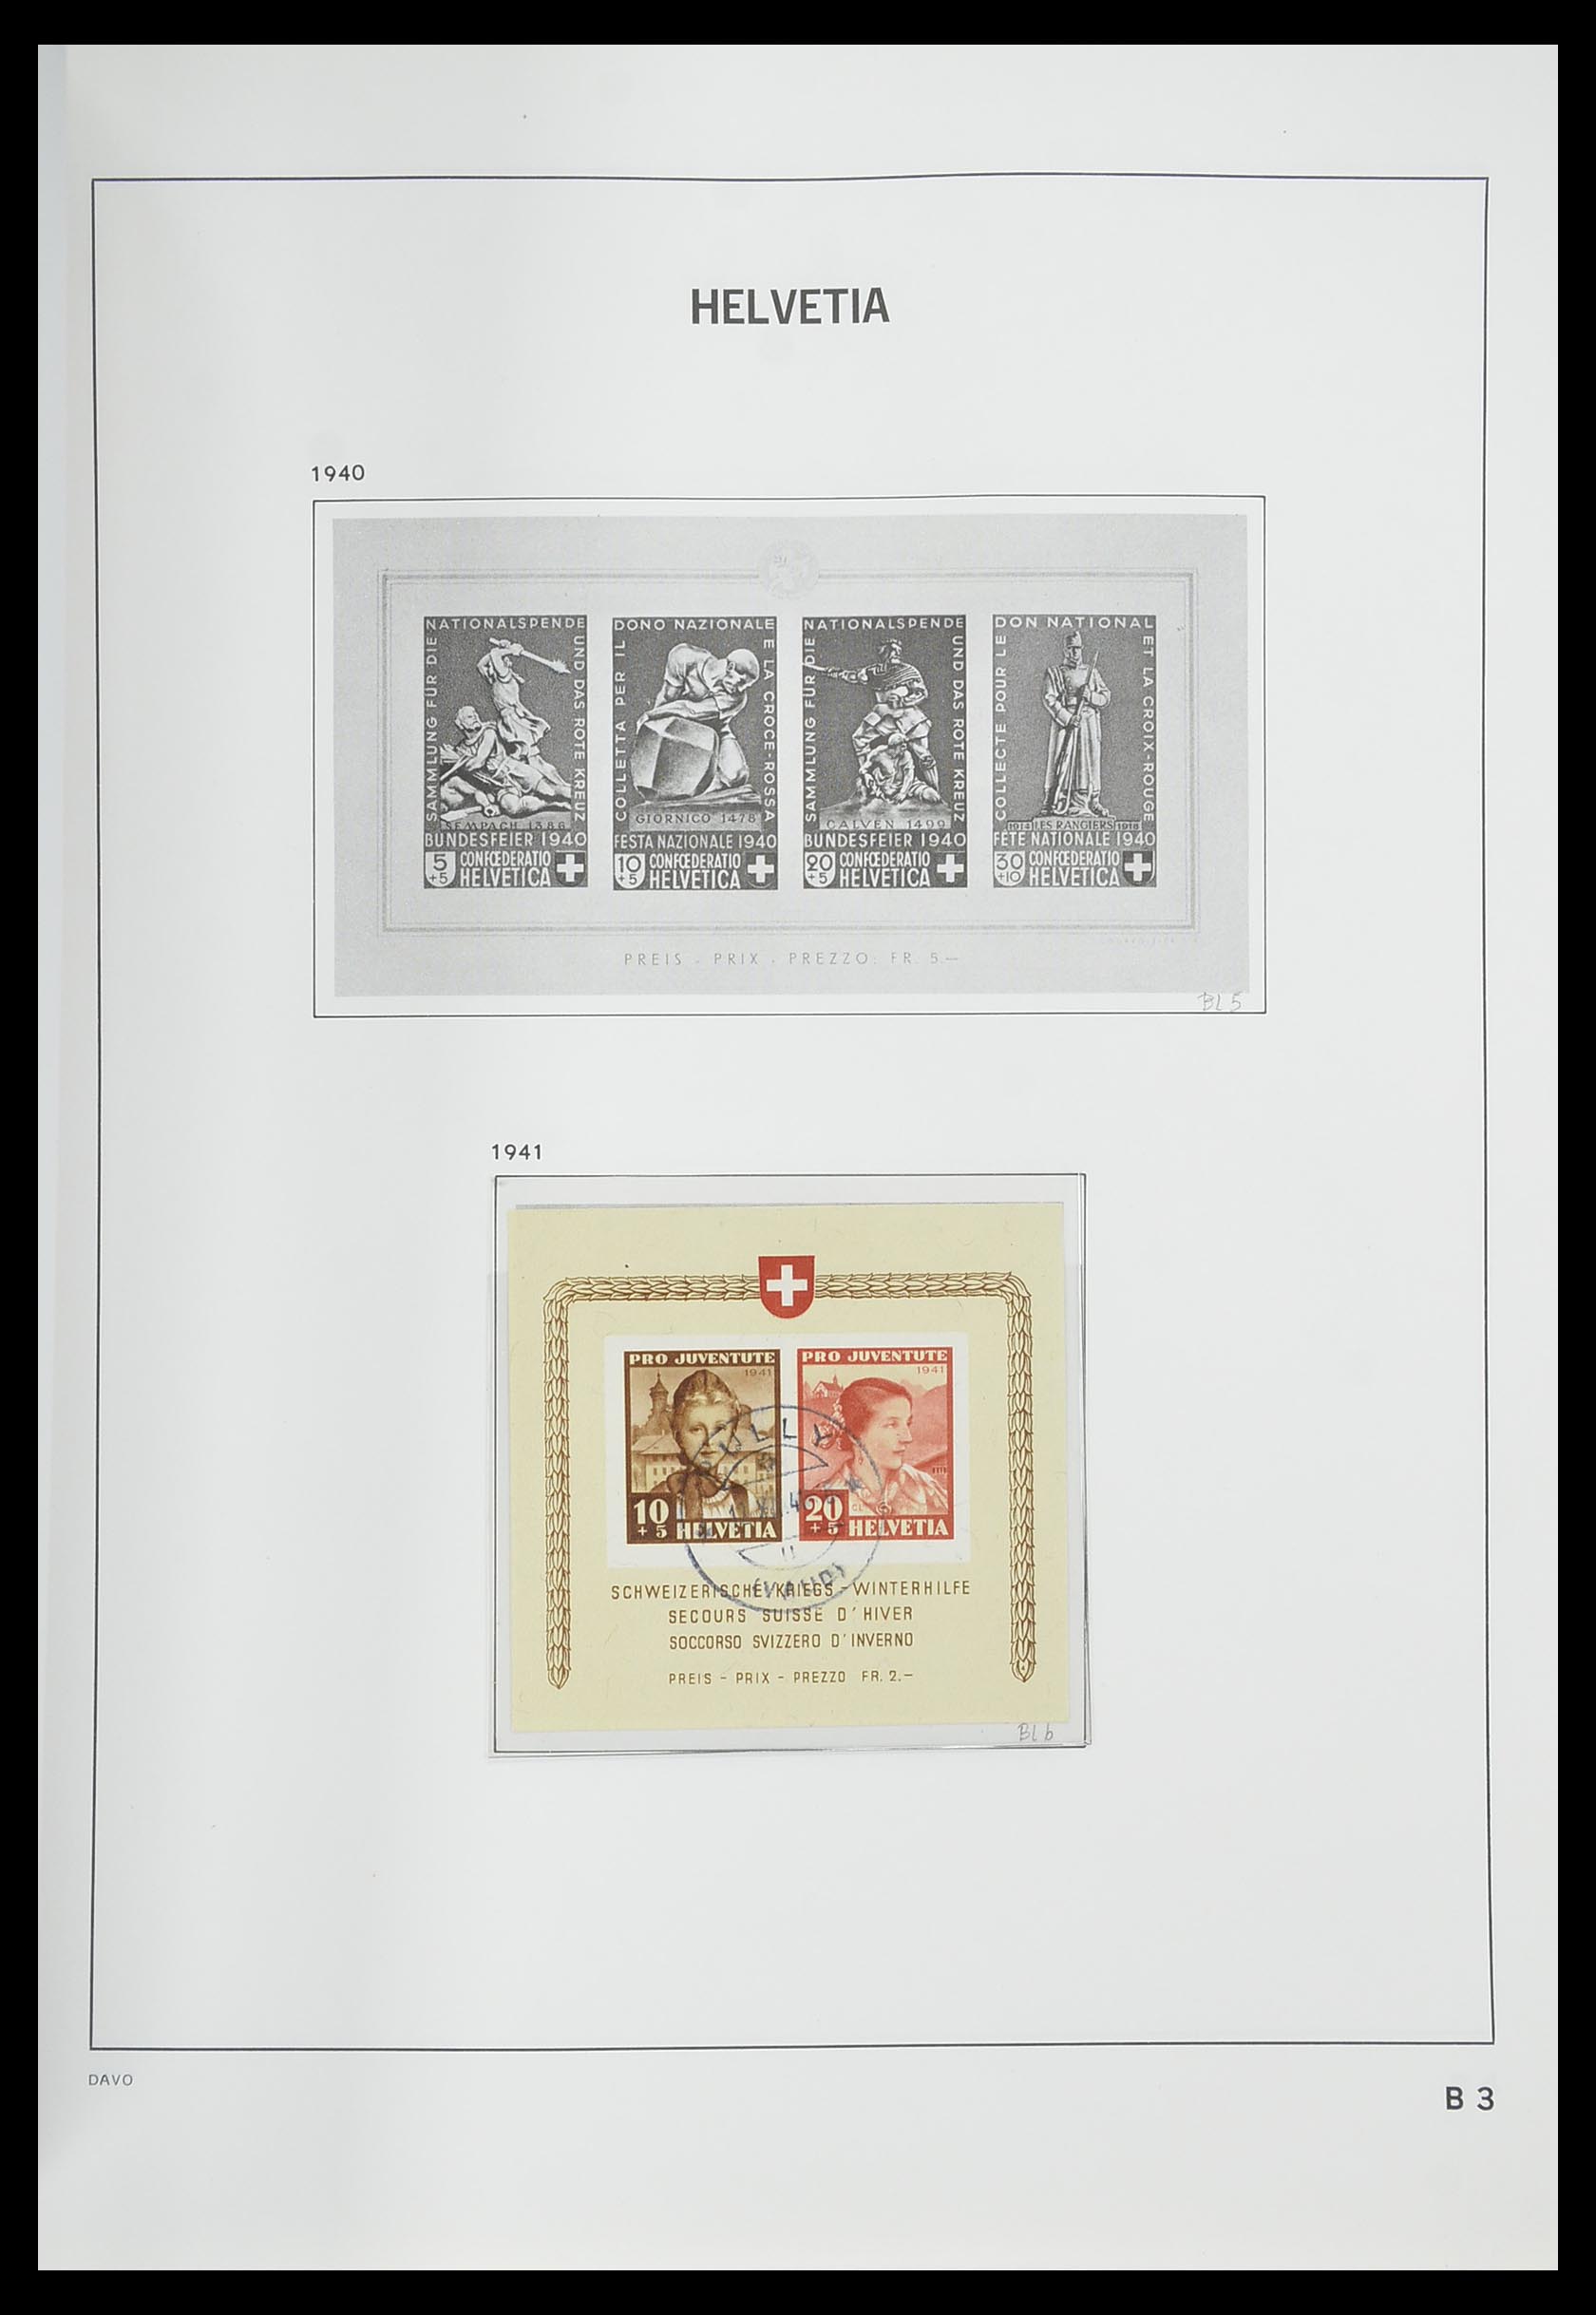 33559 136 - Stamp collection 33559 Switzerland 1850-2000.